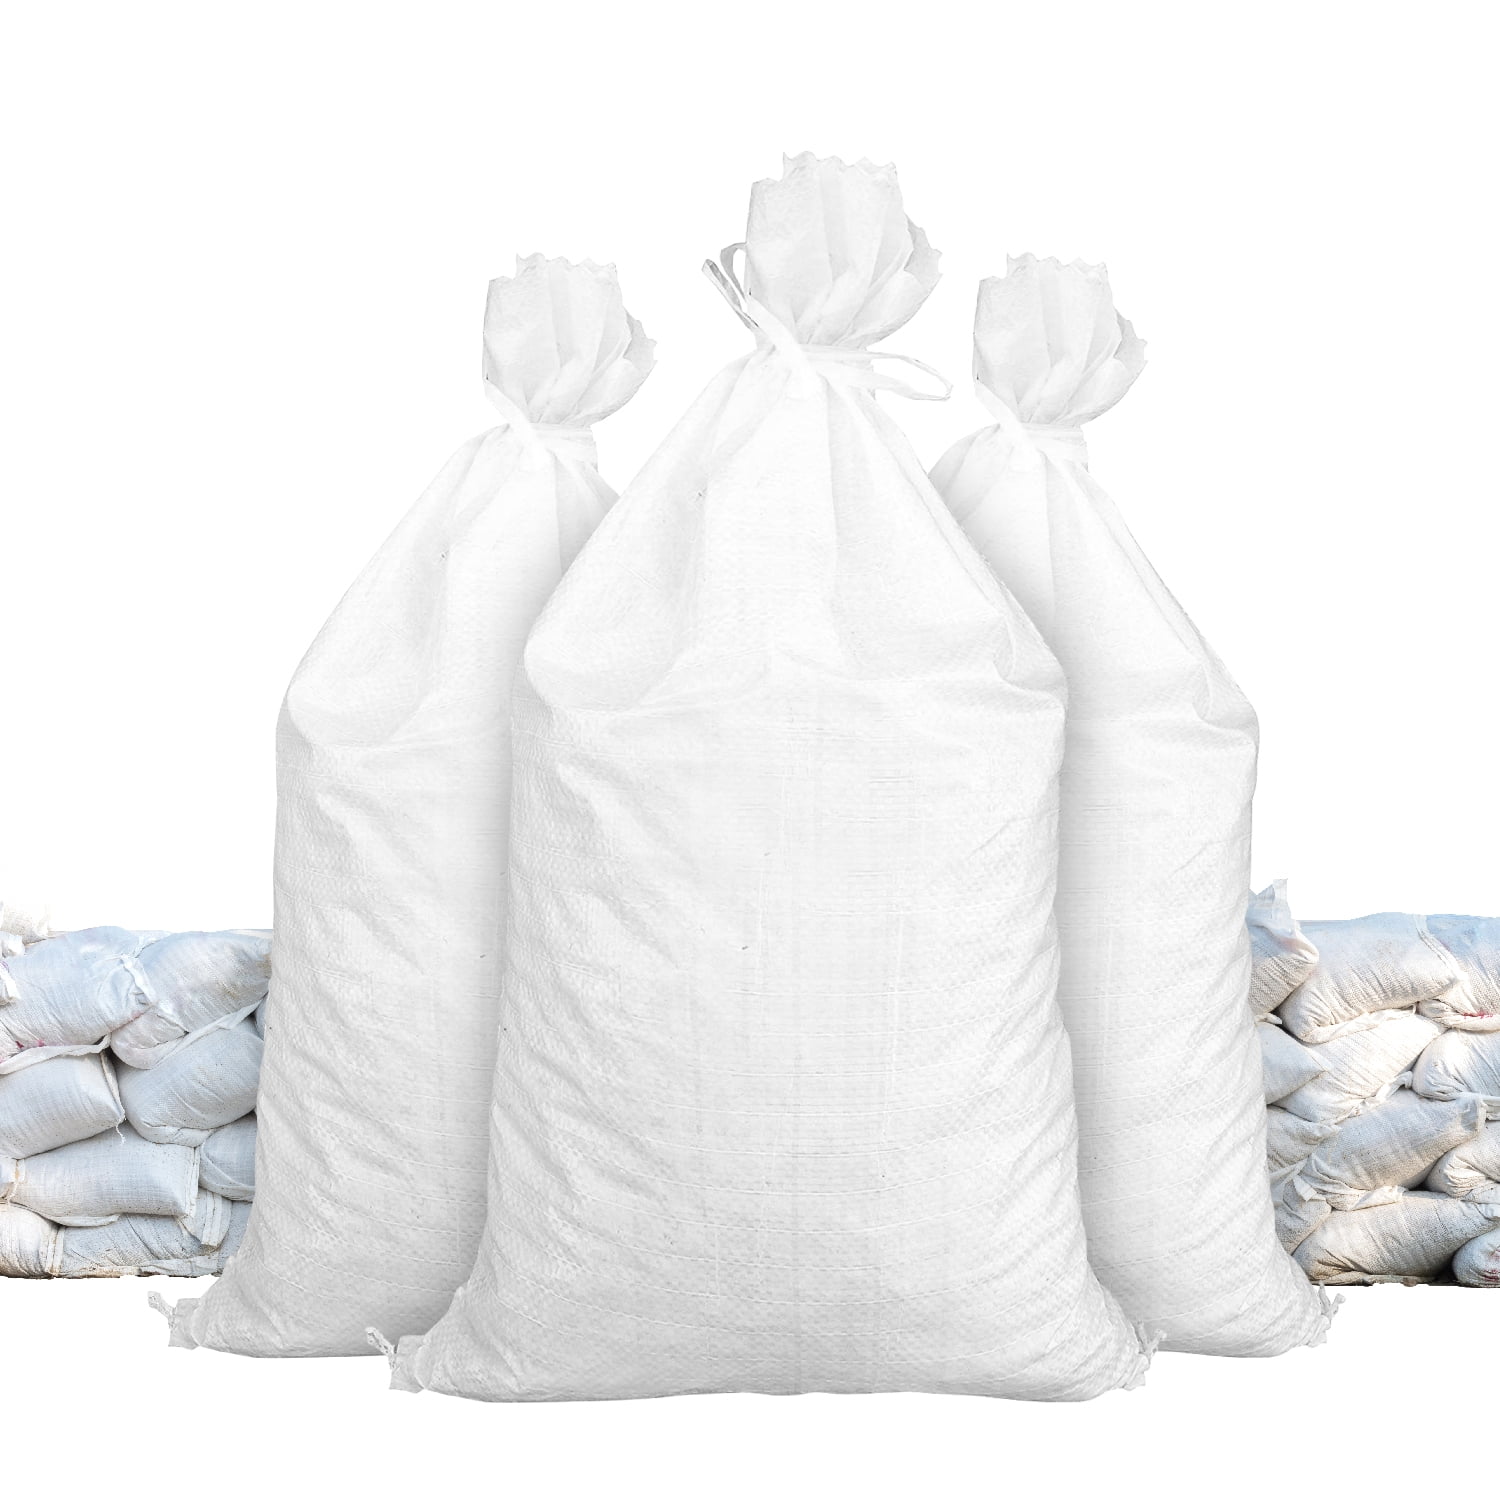 Empty White Woven Polypropylene Sandbags of 14” X 26” sandbags UV Coating Protection with Ties 50 Packs sandbags for Flood Control 